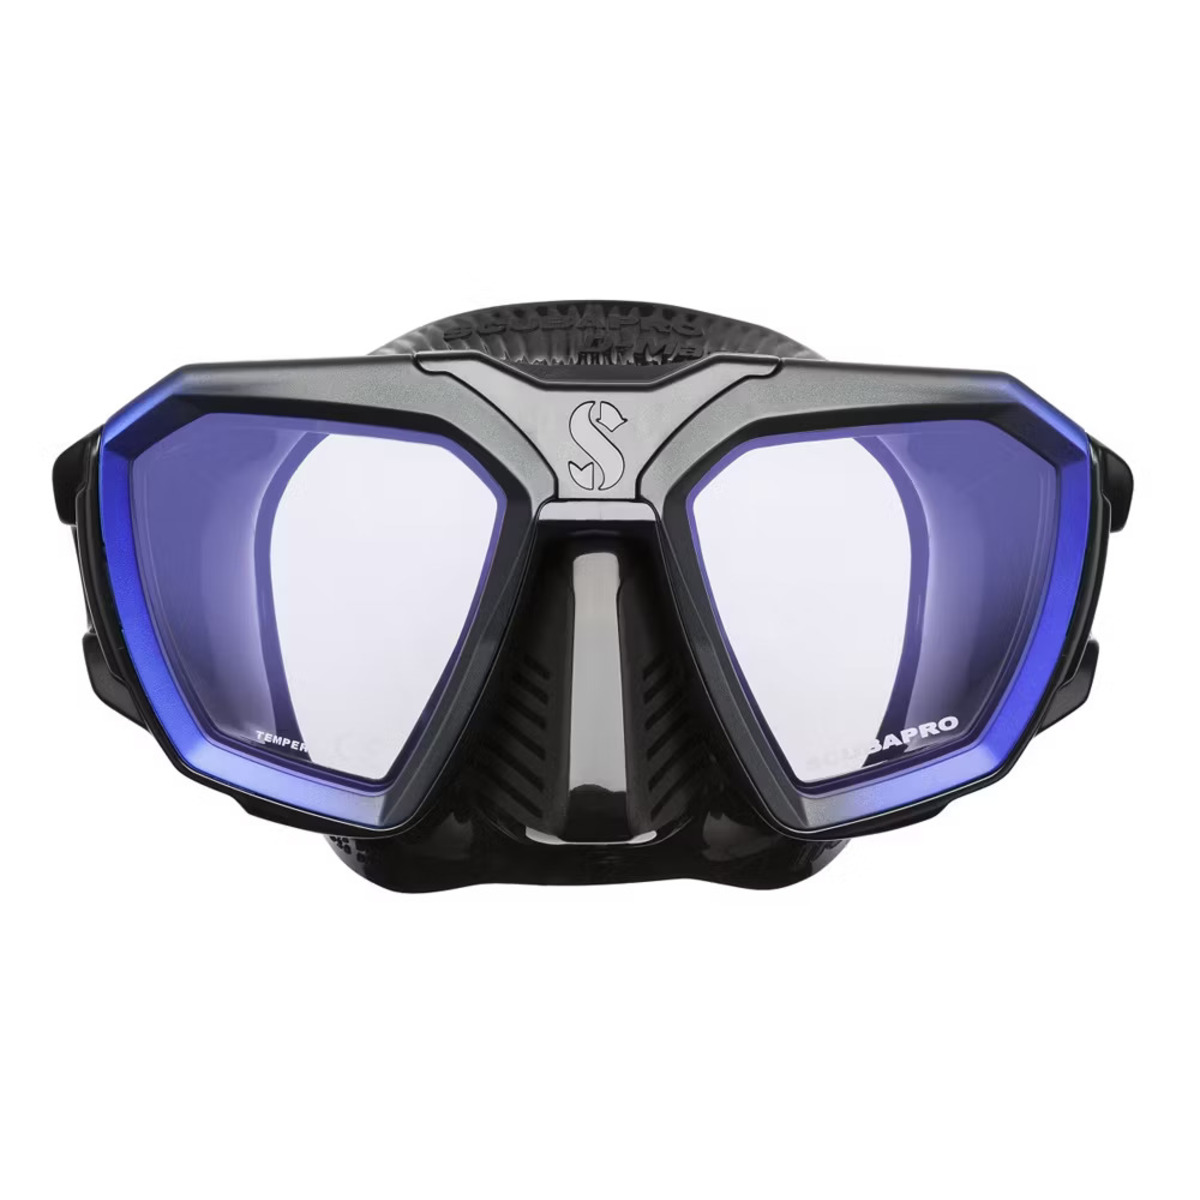 Trident Aqua Optics: Installing The Mask Magnifier Kit